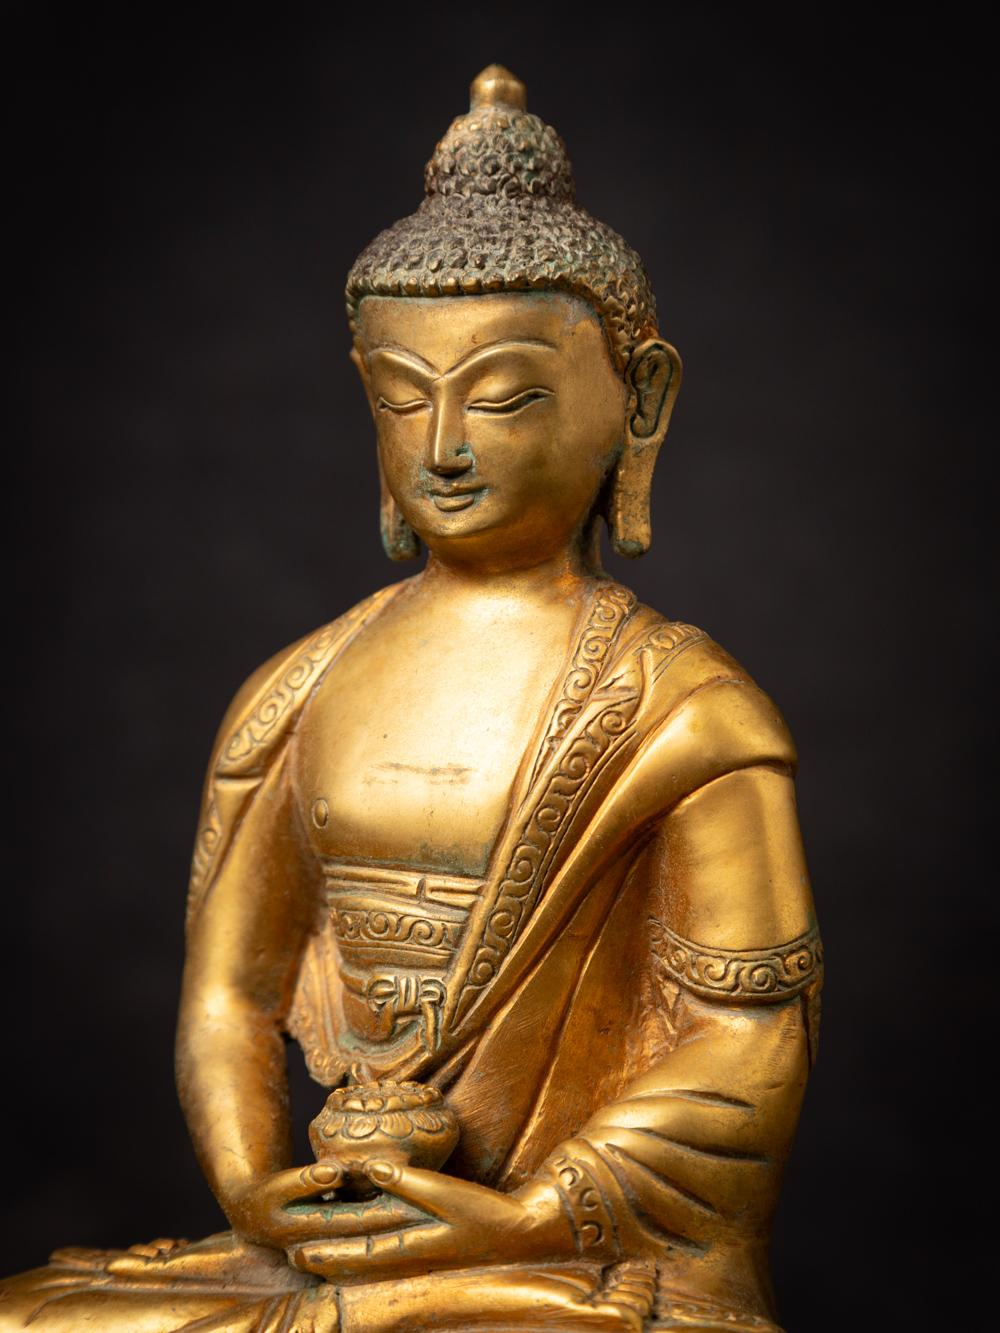 Middle 20th century Old bronze Nepali Buddha statue - OriginalBuddhas 1